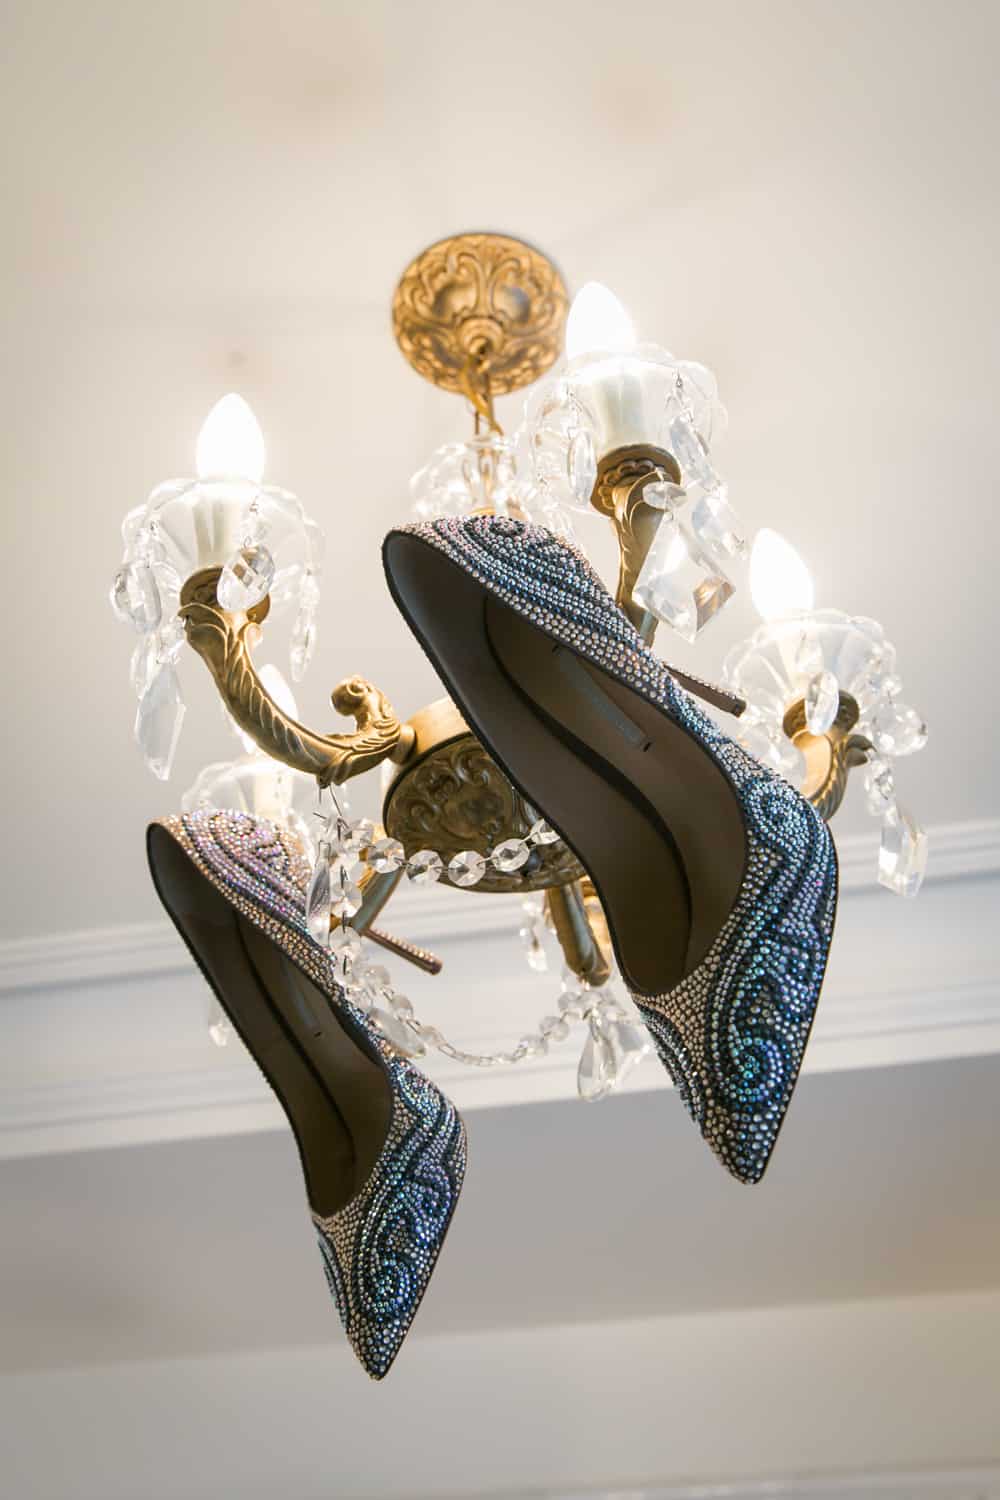 Sequined high heels hanging off a chandelier